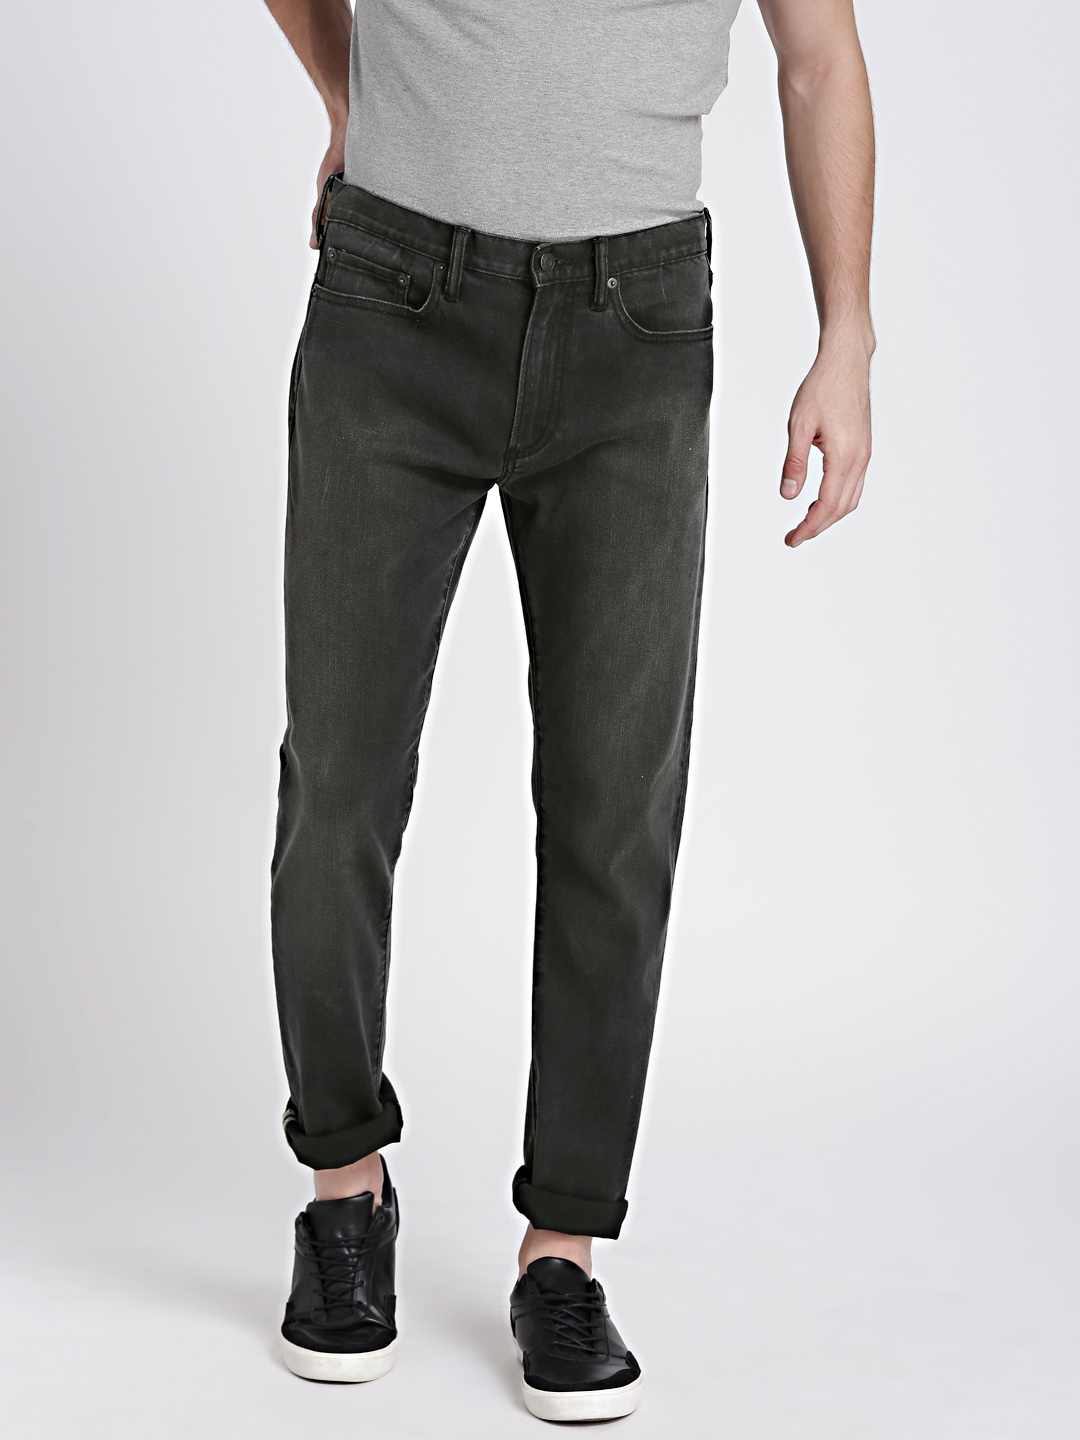 gap mens soft wear jeans